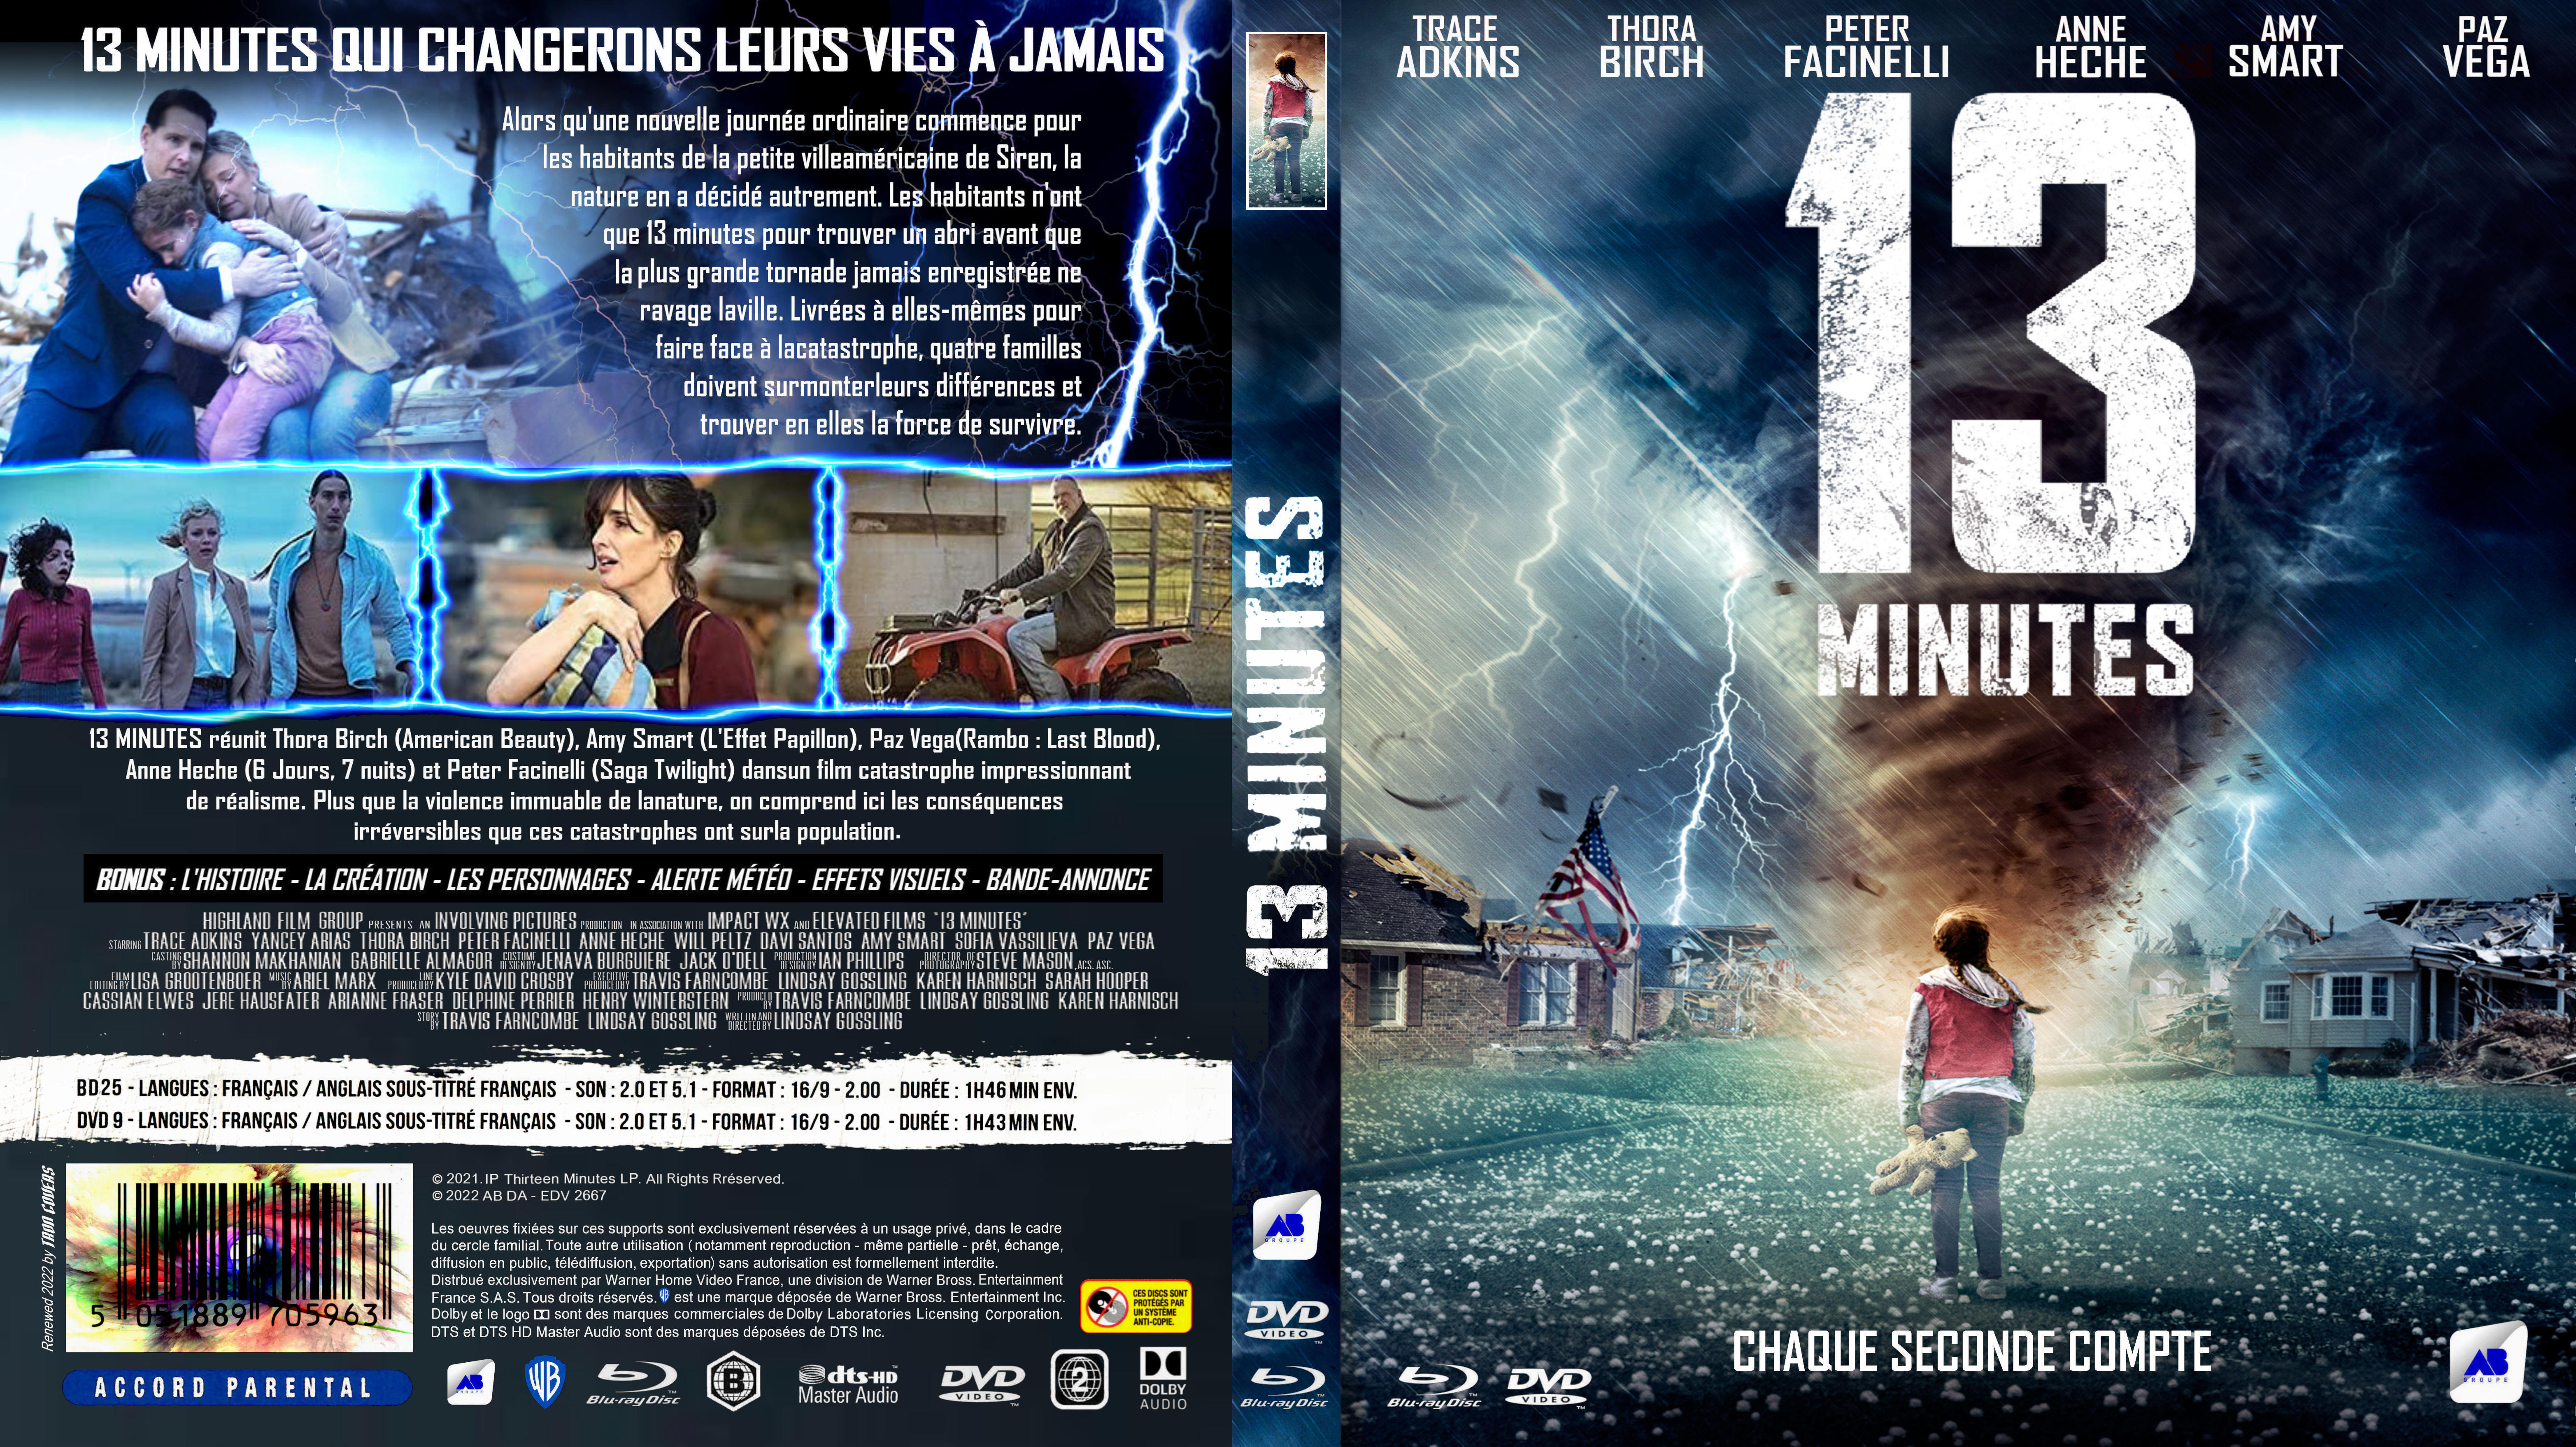 Jaquette DVD 13 Minutes custom (BLU-RAY)